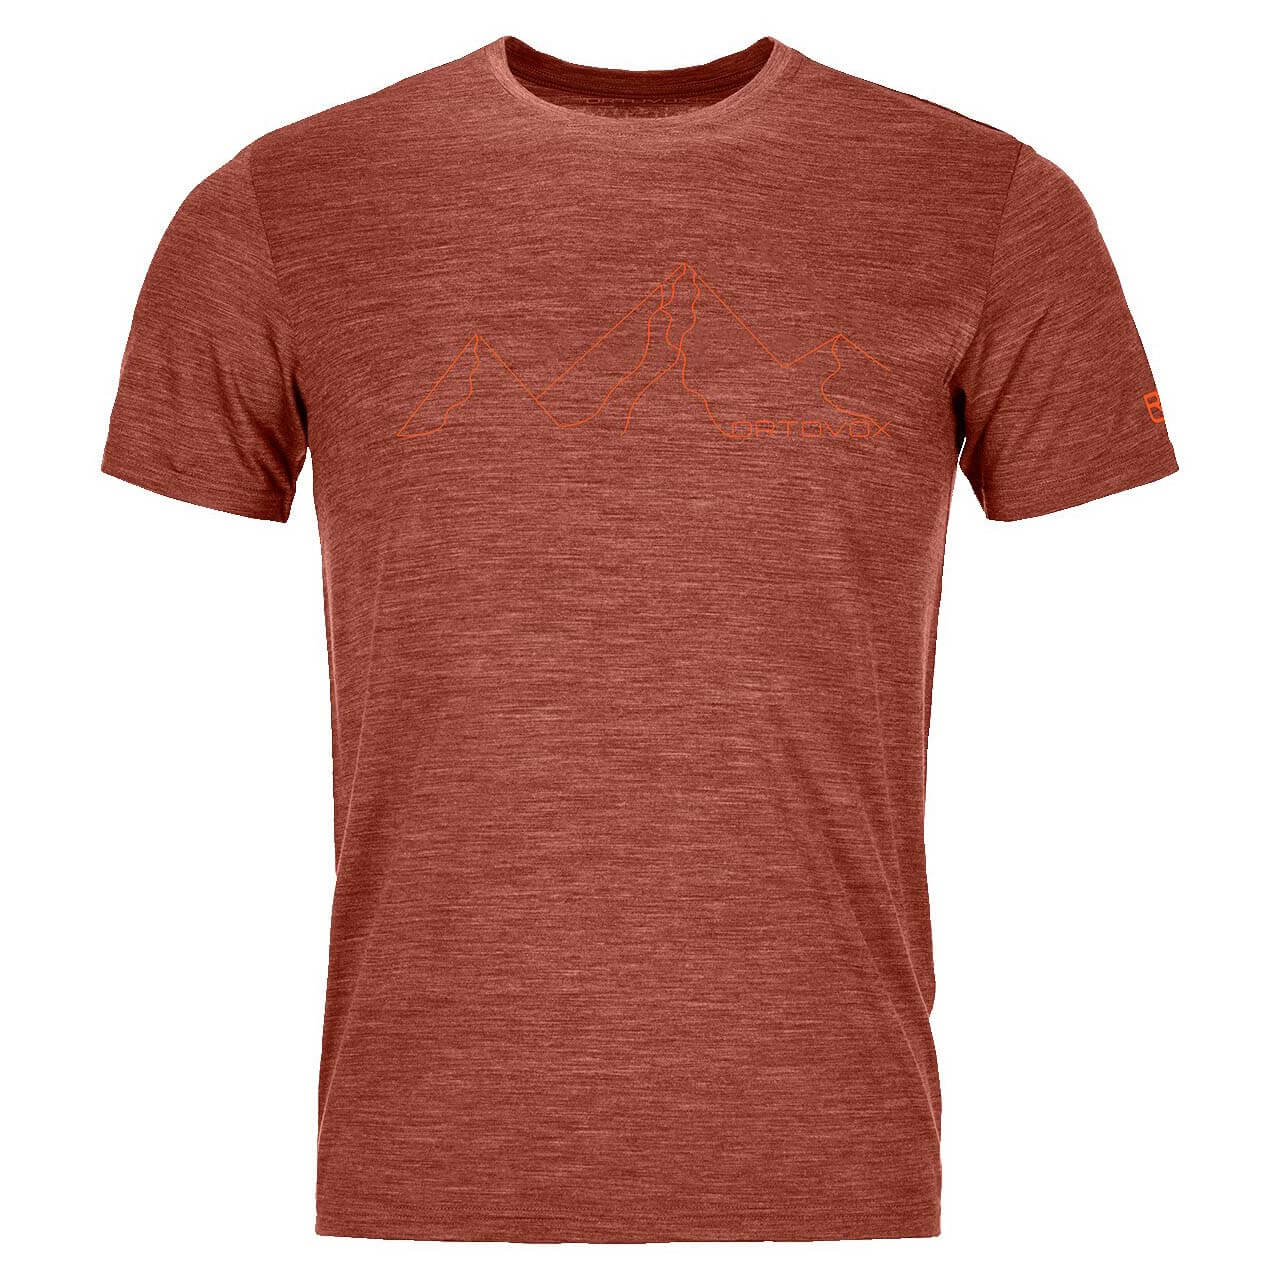 Ortovox Mountain T-Shirt 150 Cool - Clay Orange Blend, XL